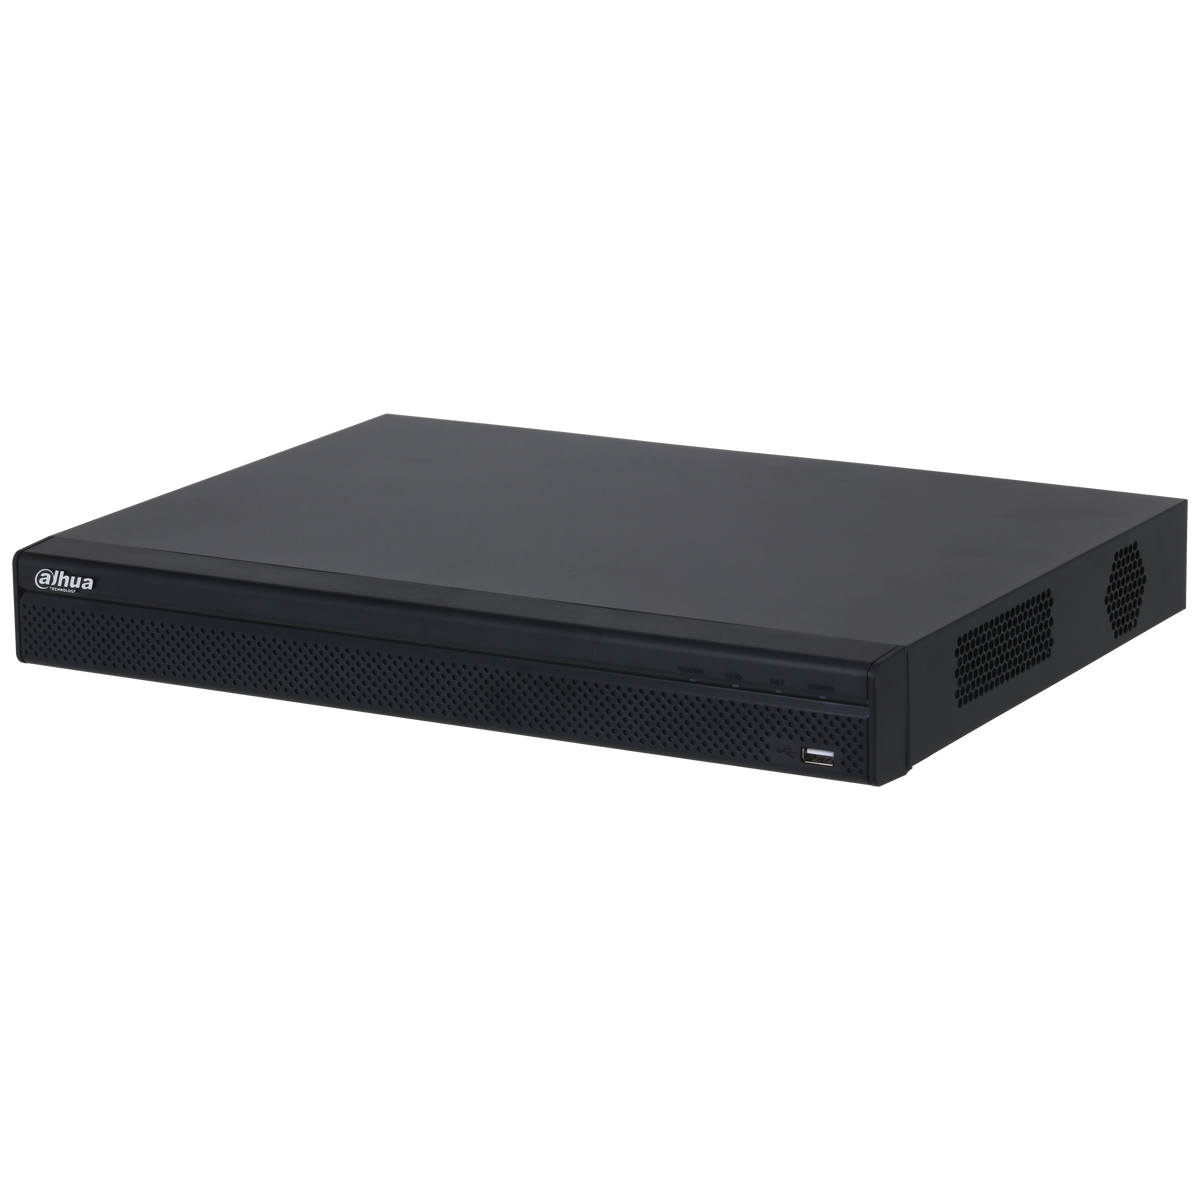 DAHUA NVR2204-P-4KS3 4CH 1U 4PoE 2HDDs Lite Network Video Recorder